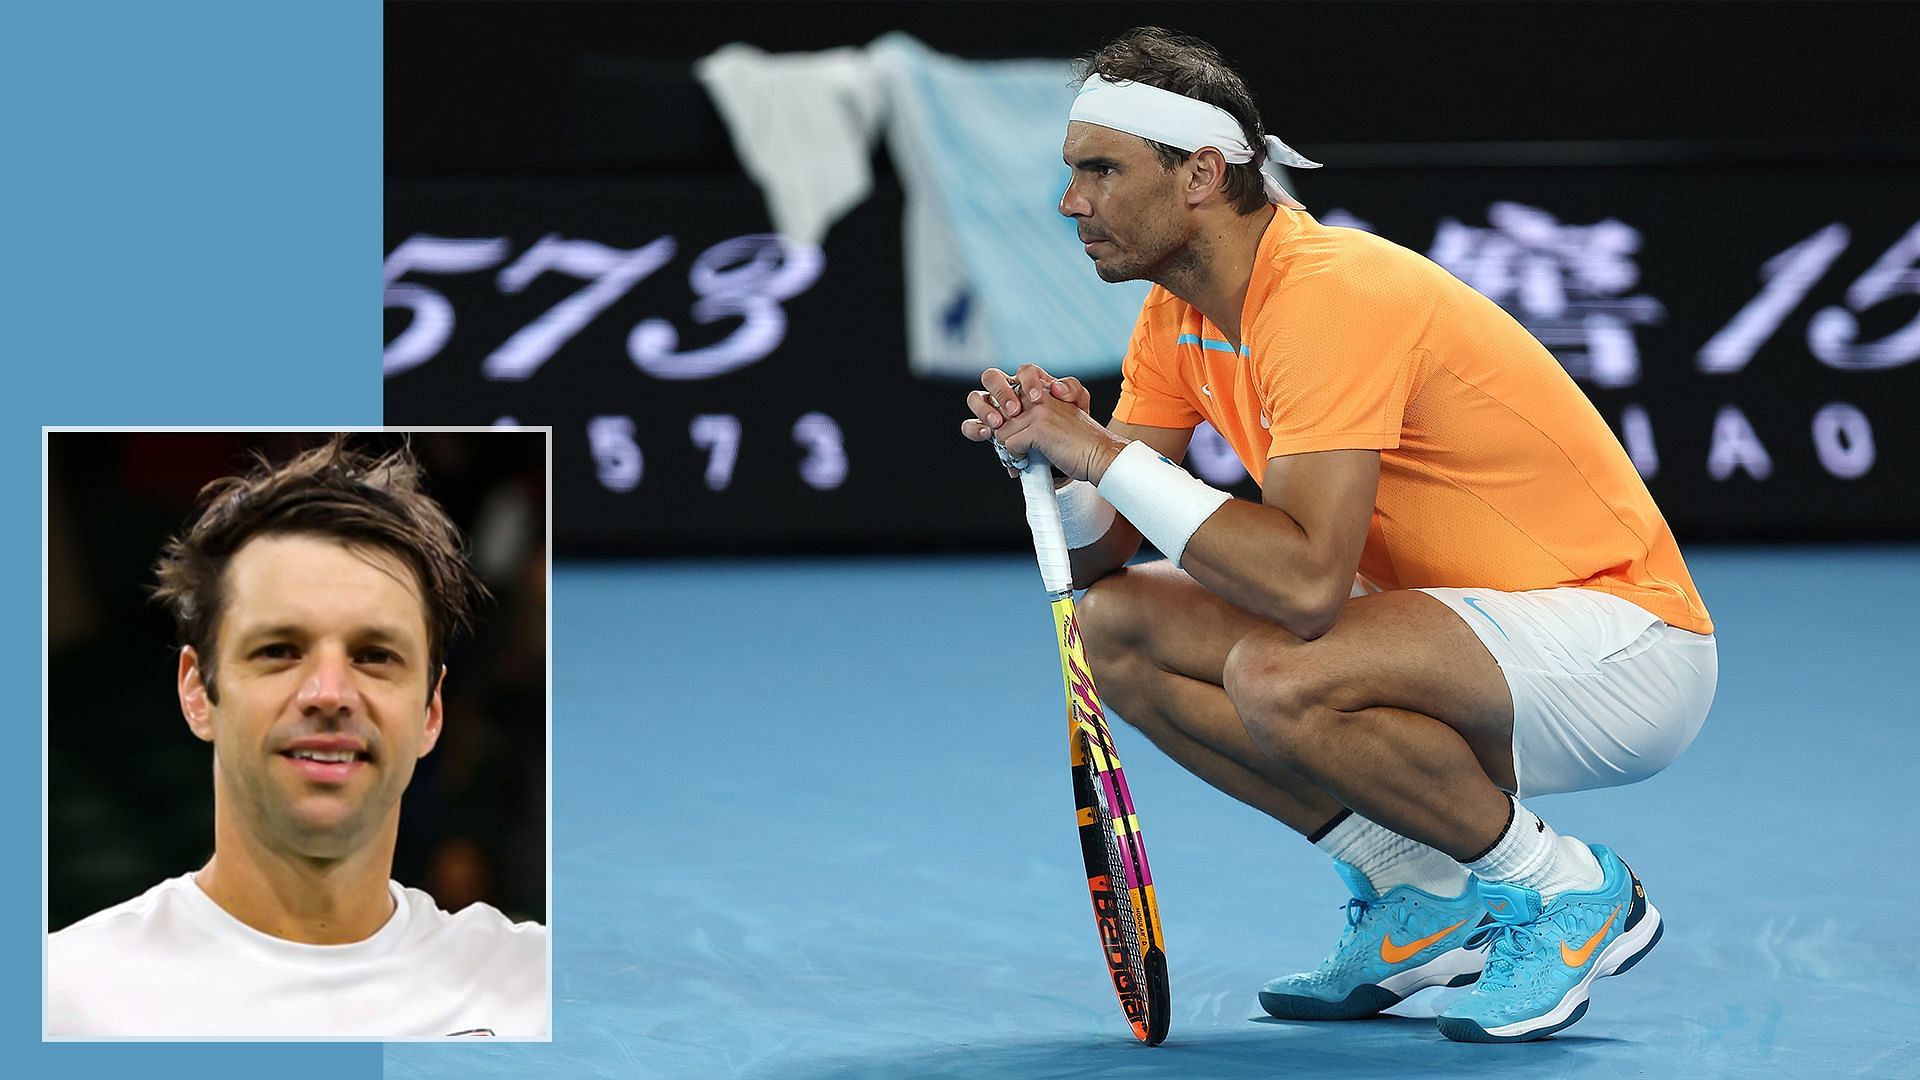 Rafael Nadal has had injury woes in the last few months.